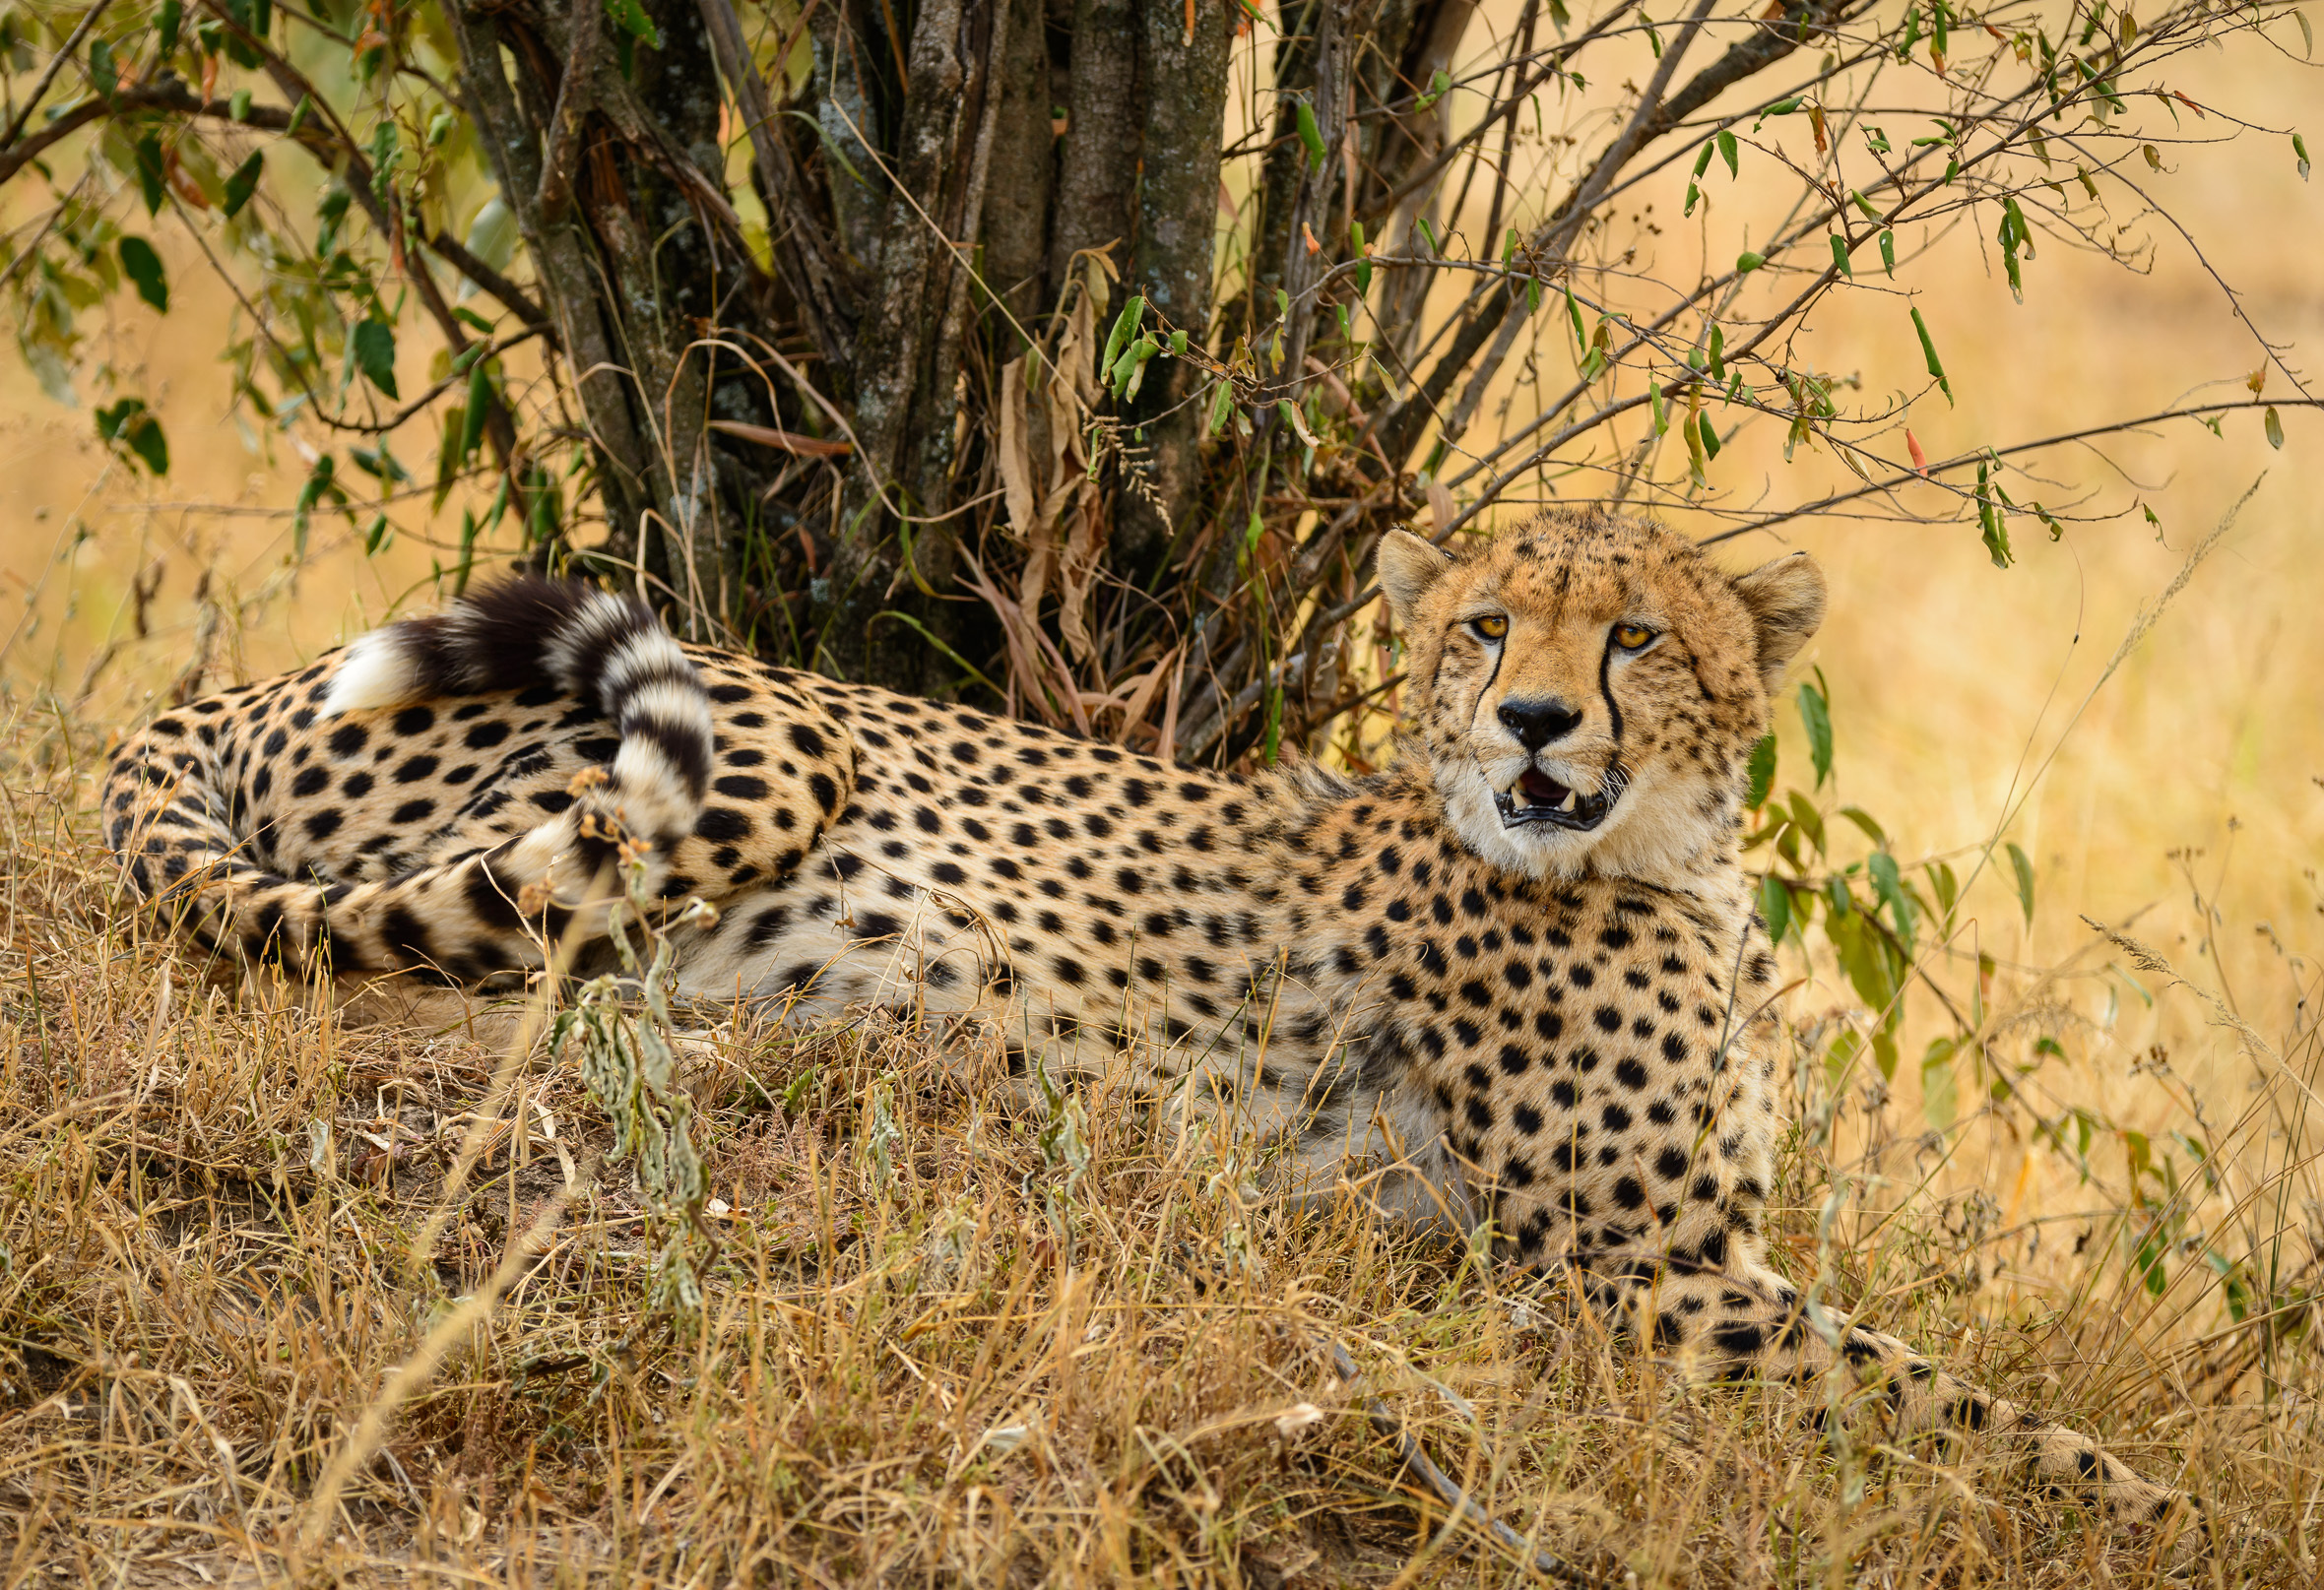 Restful Cheetah